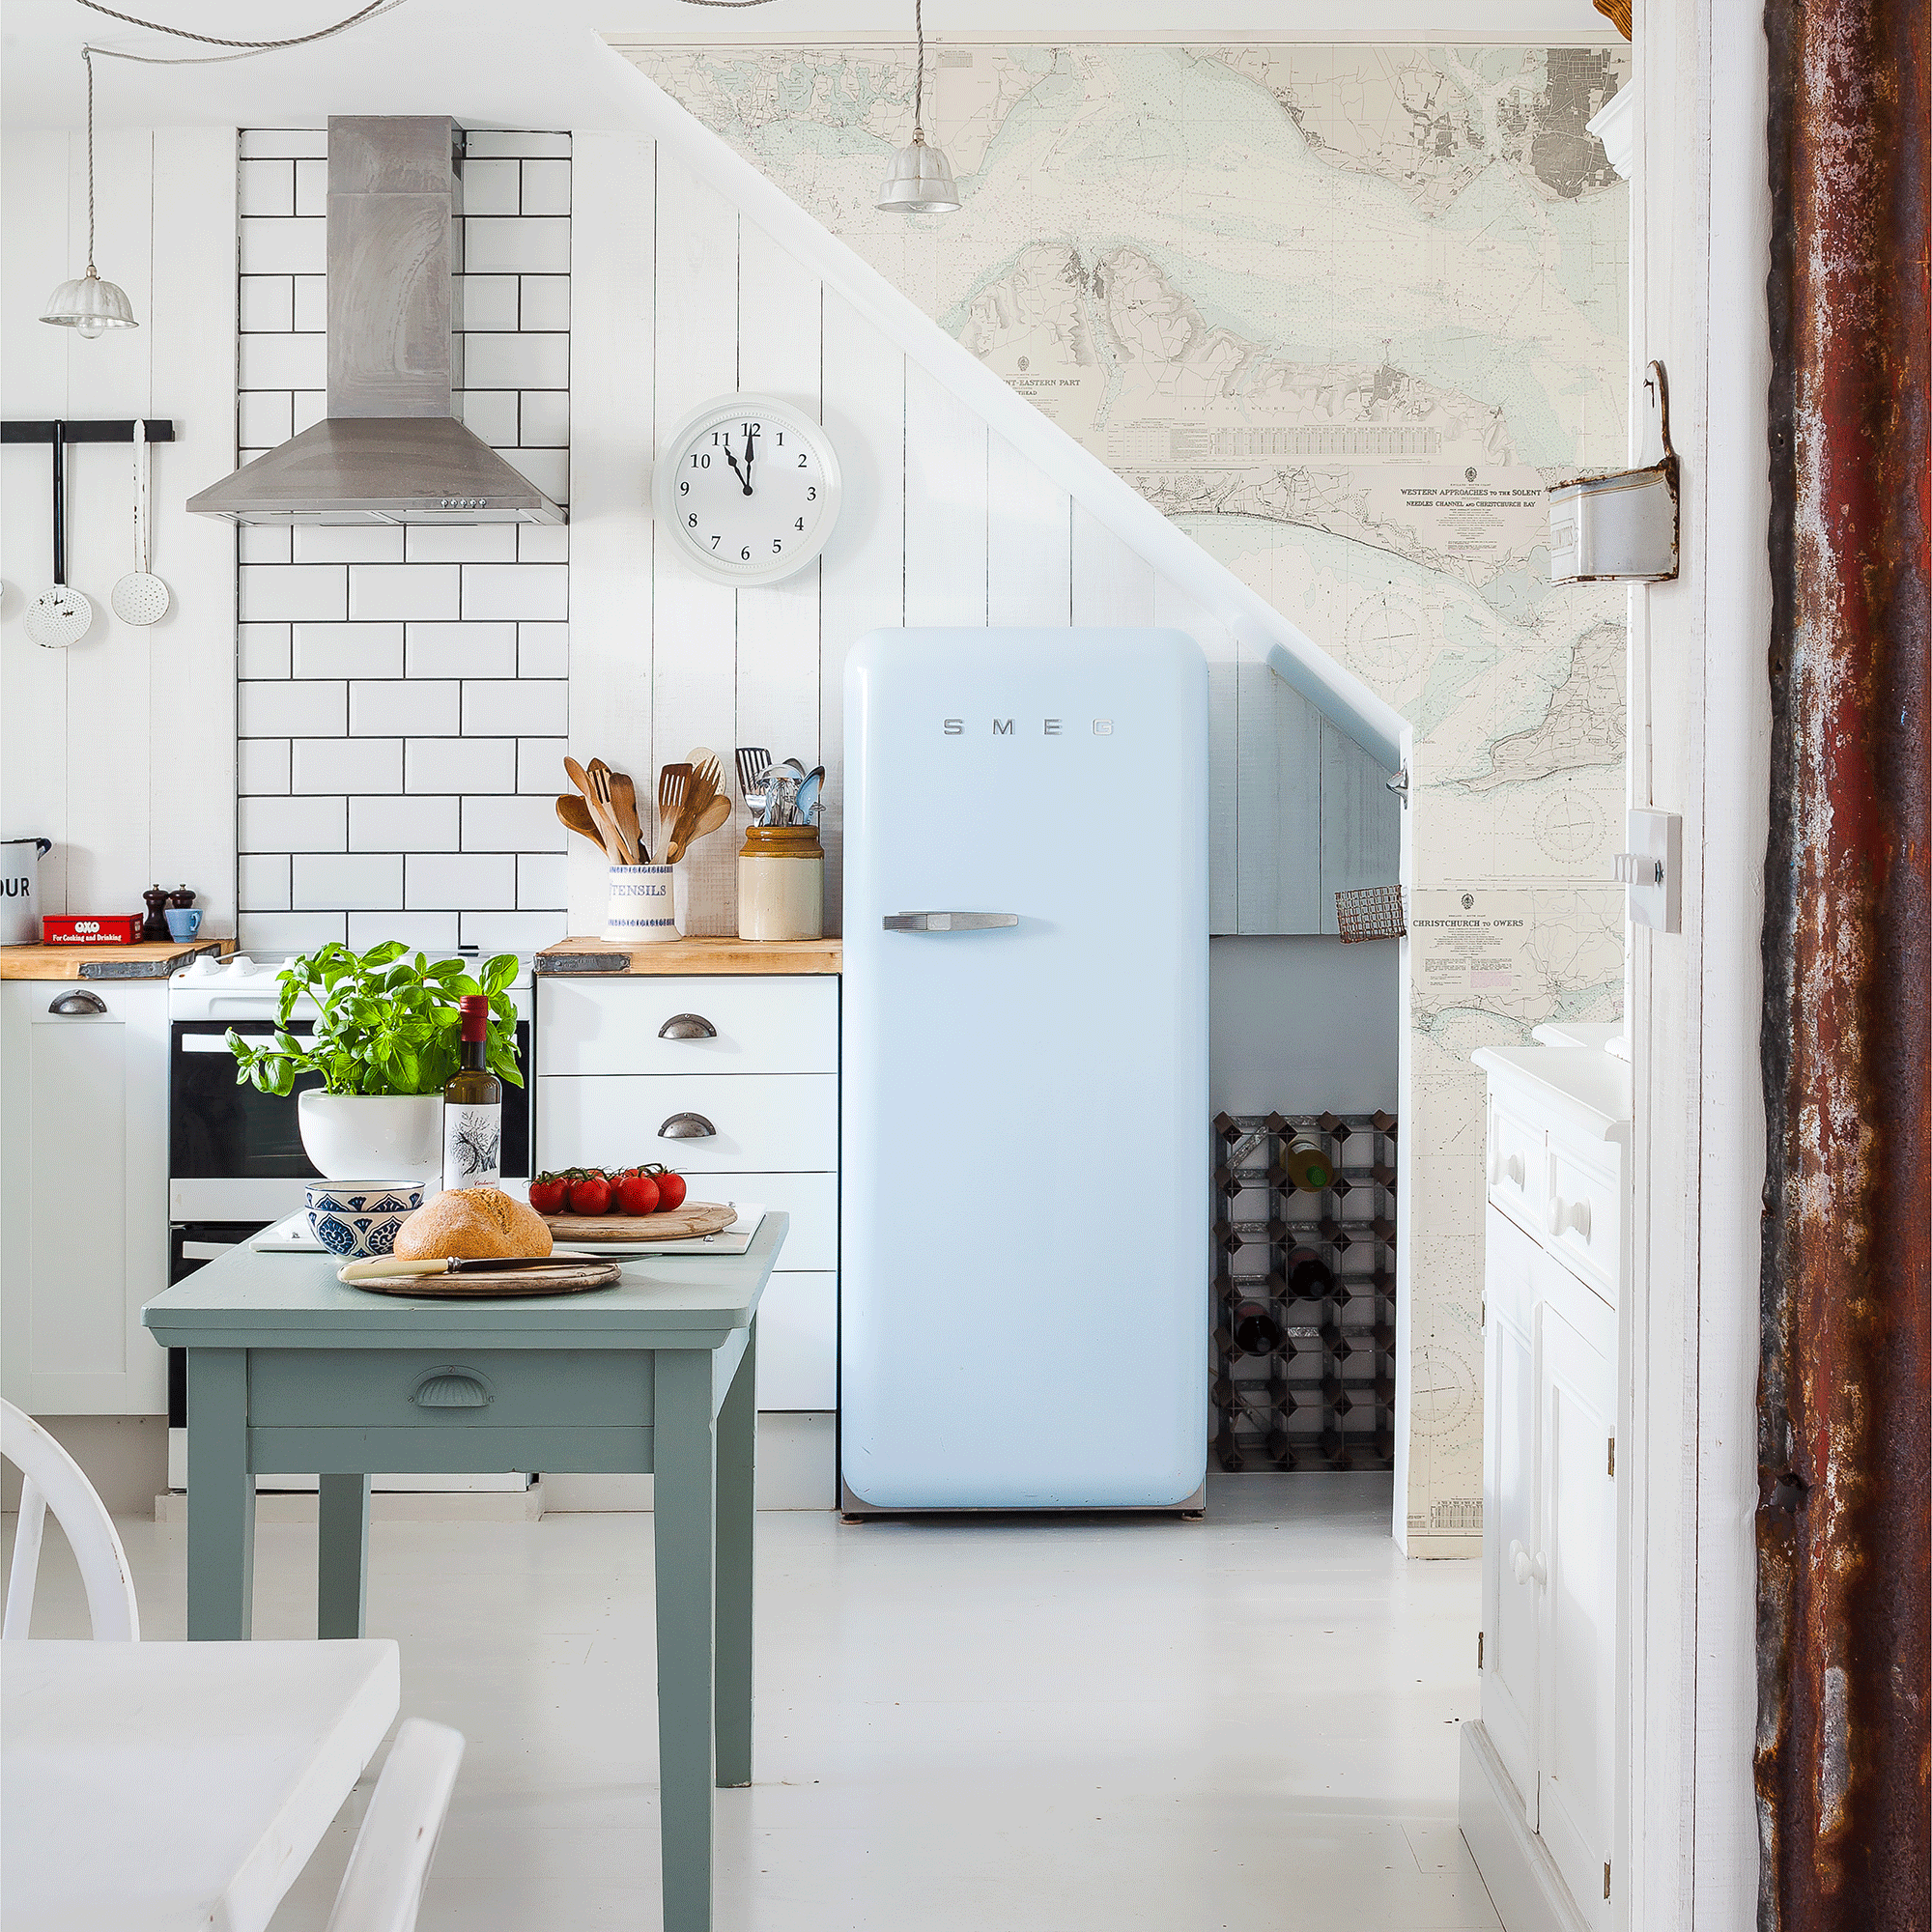 Blue fridge freezer in a white kitchen